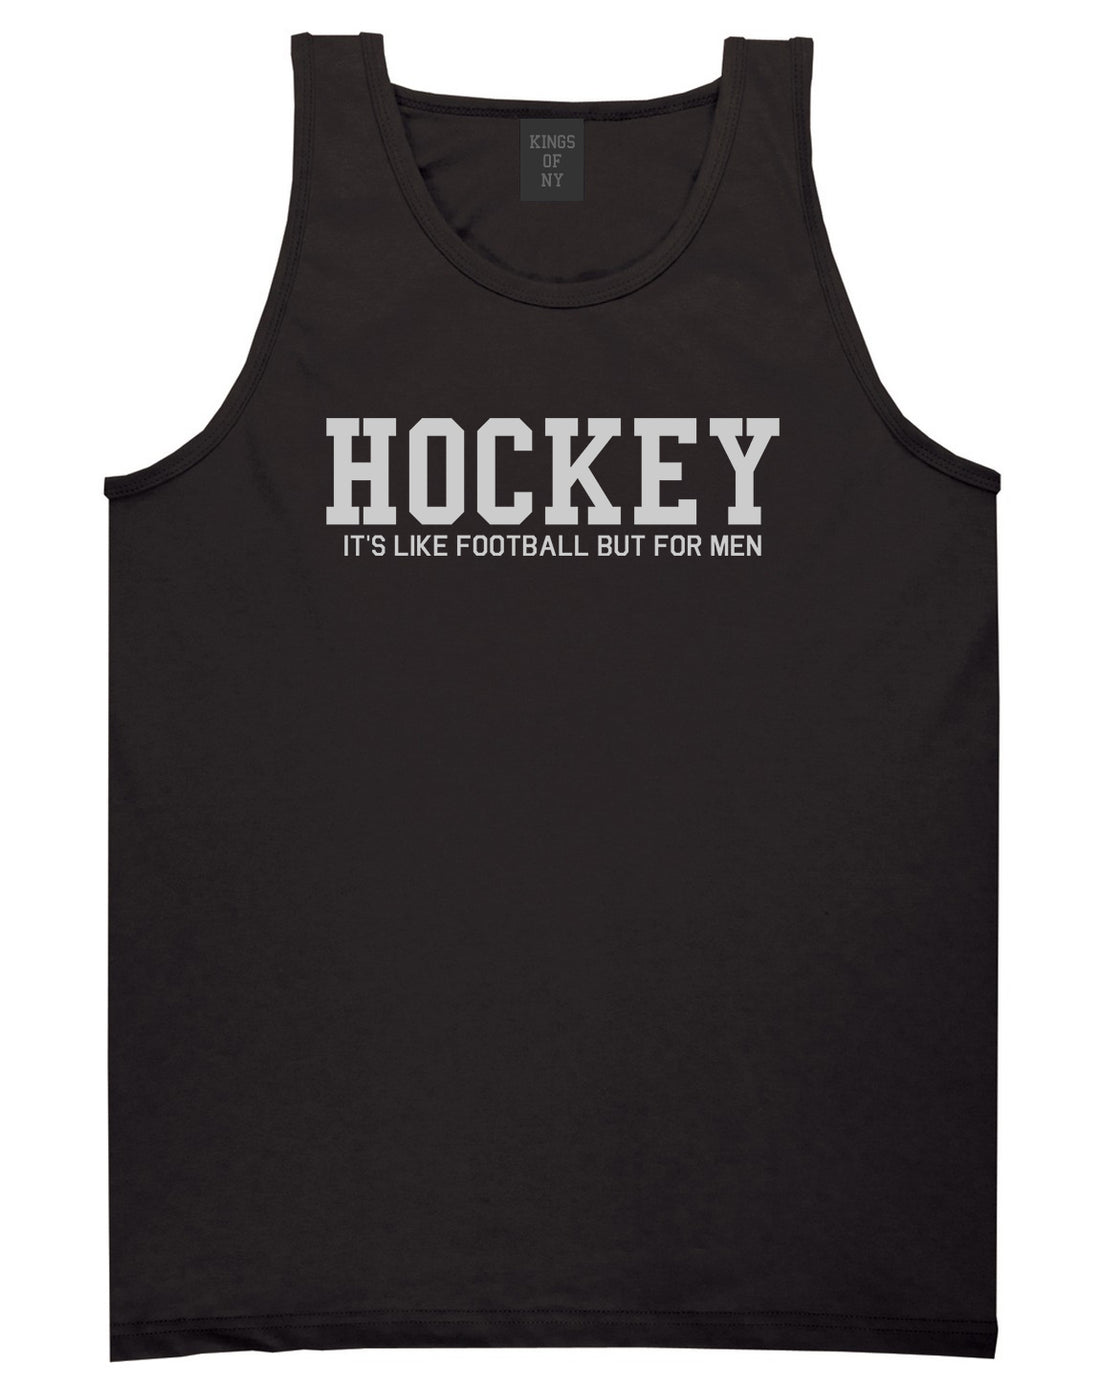 Hockey Its Like Football But For Men Funny Mens Tank Top T-Shirt Black